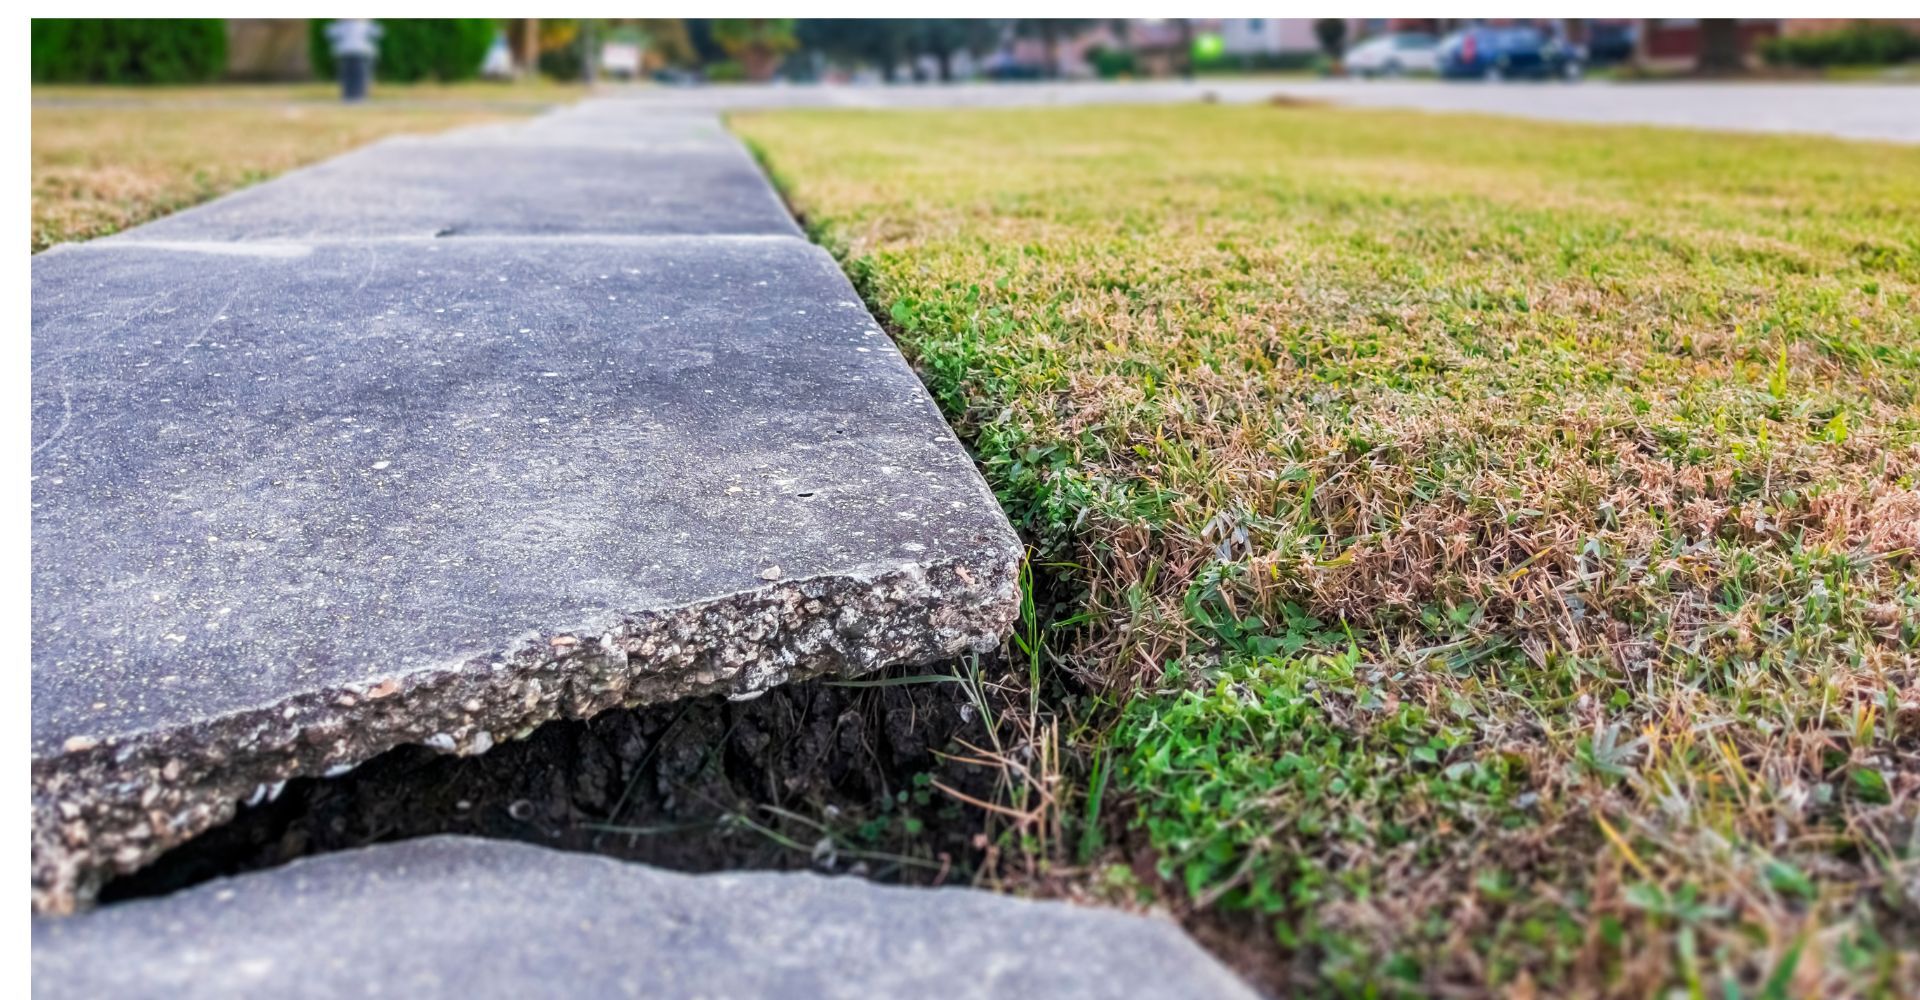 Large crack in uneven concrete sidewalk